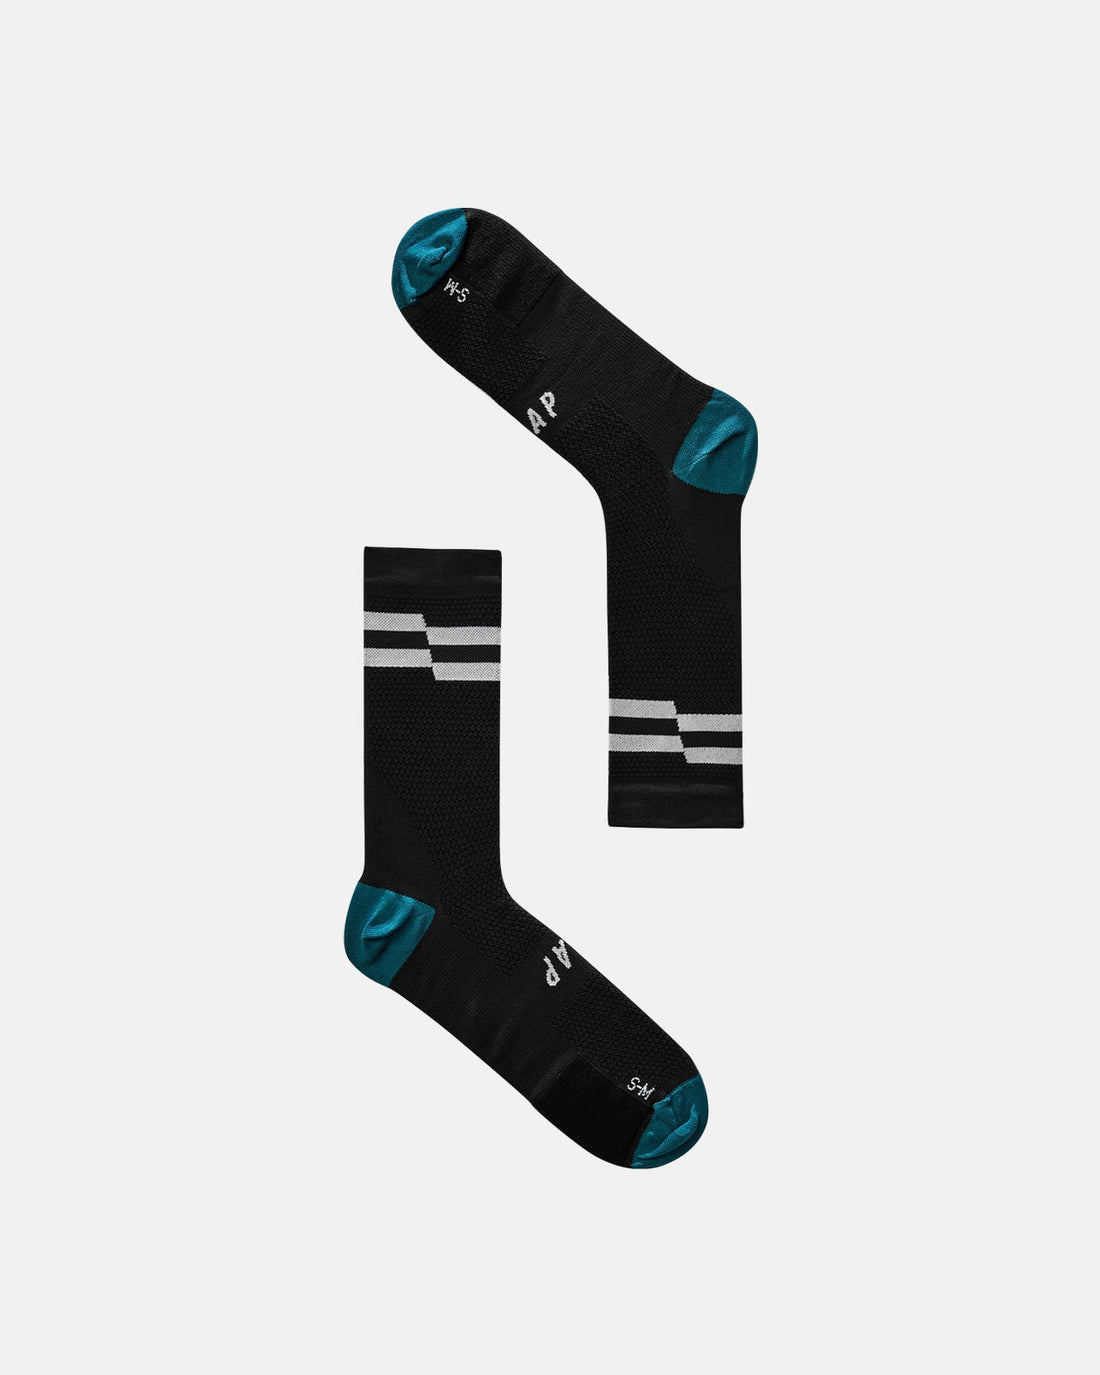 MAAP Emblem Sock - Black